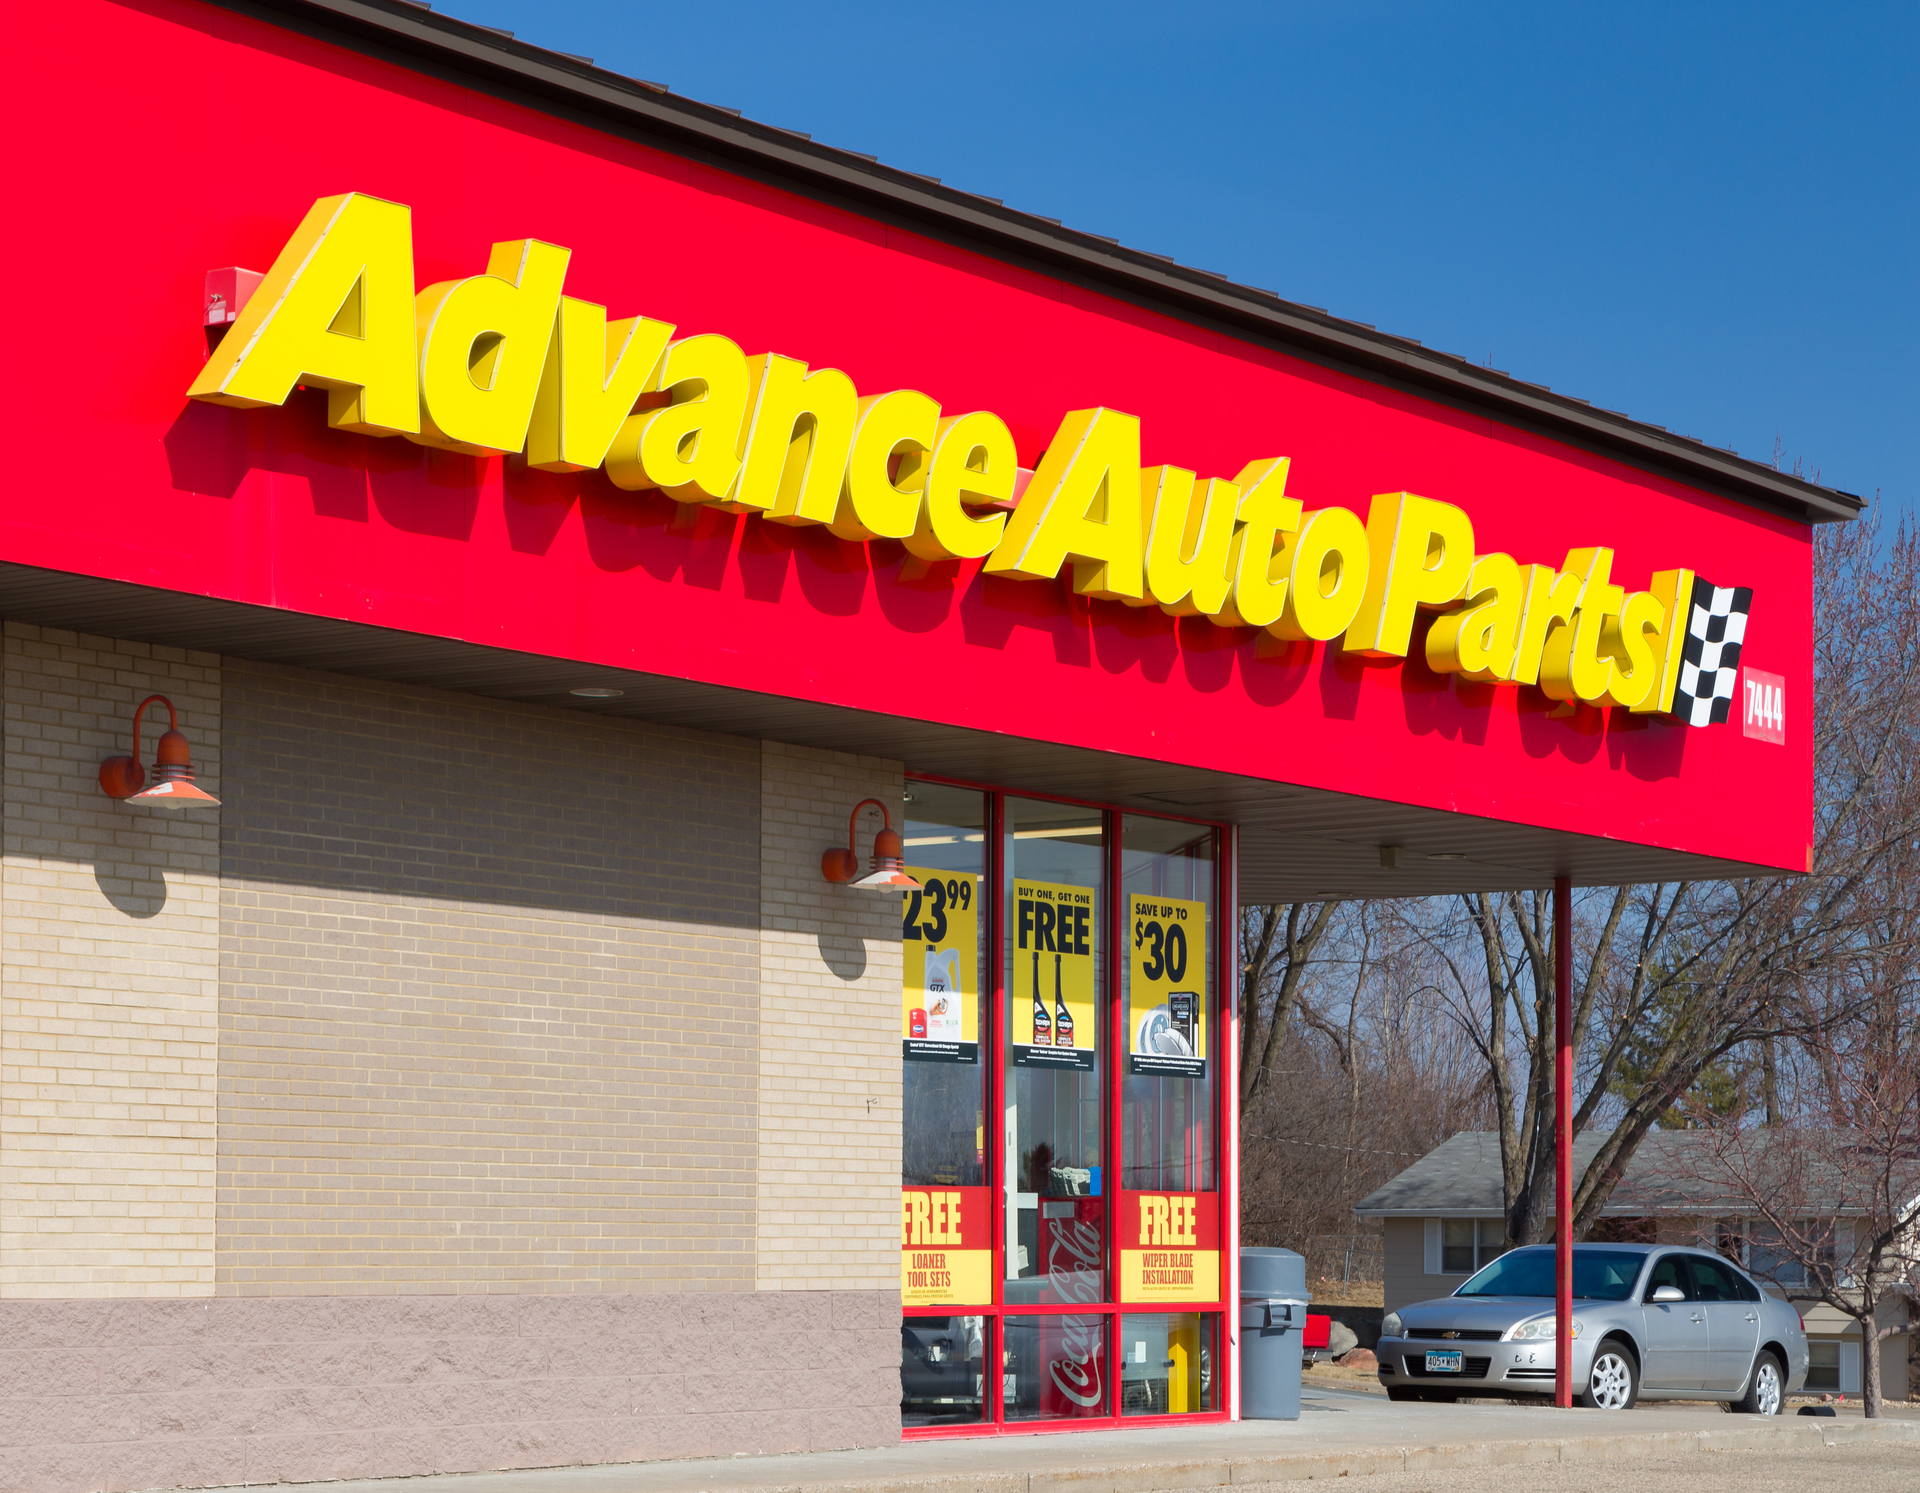 advanced auto parts locations